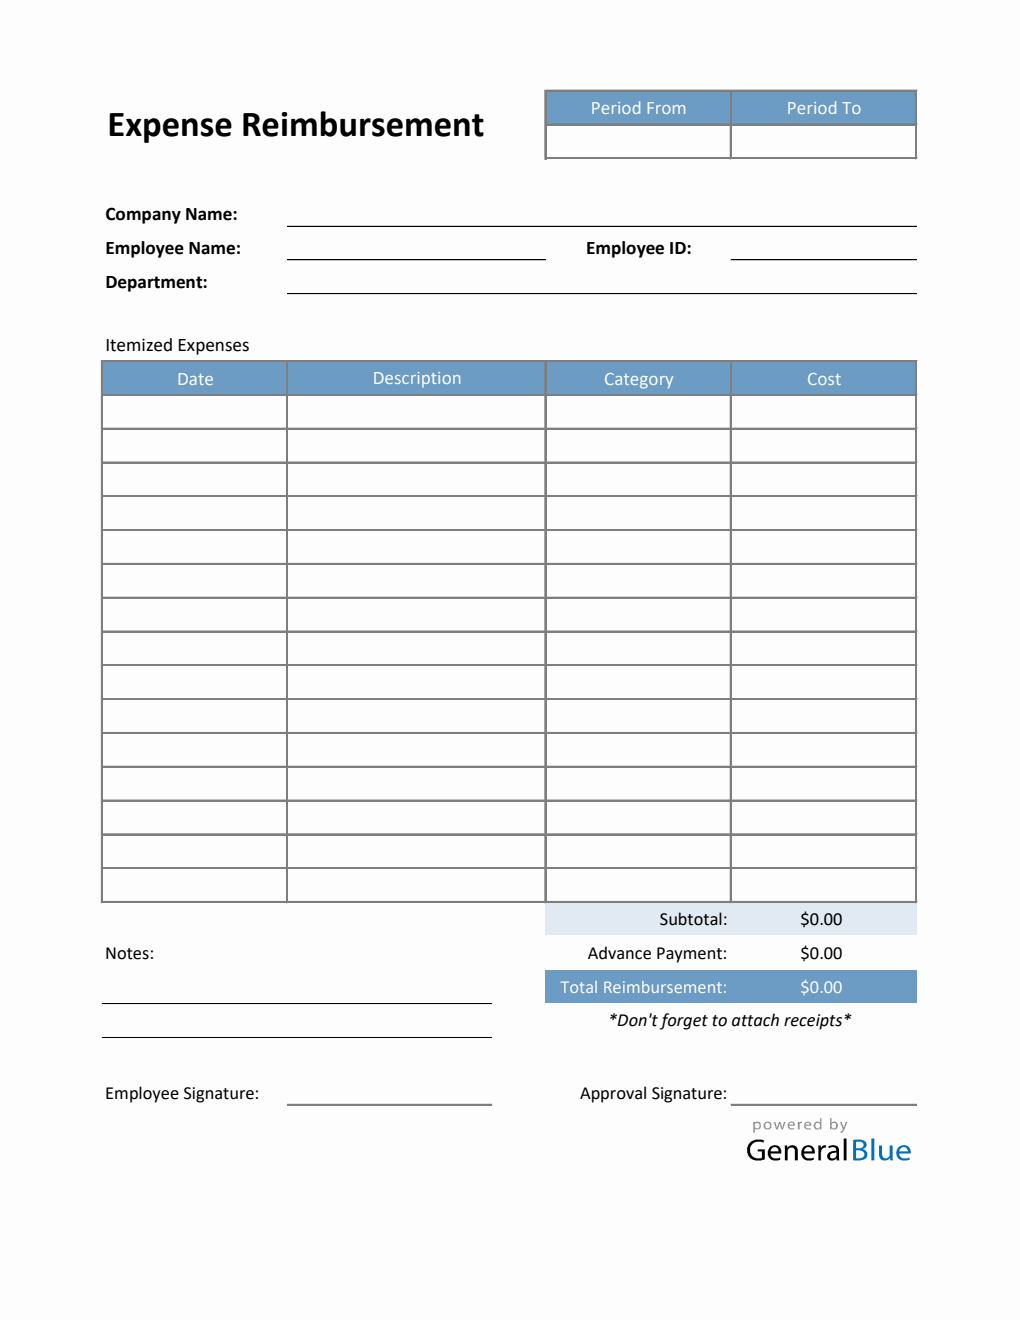 Expense Reimbursement Form in Excel (Basic)